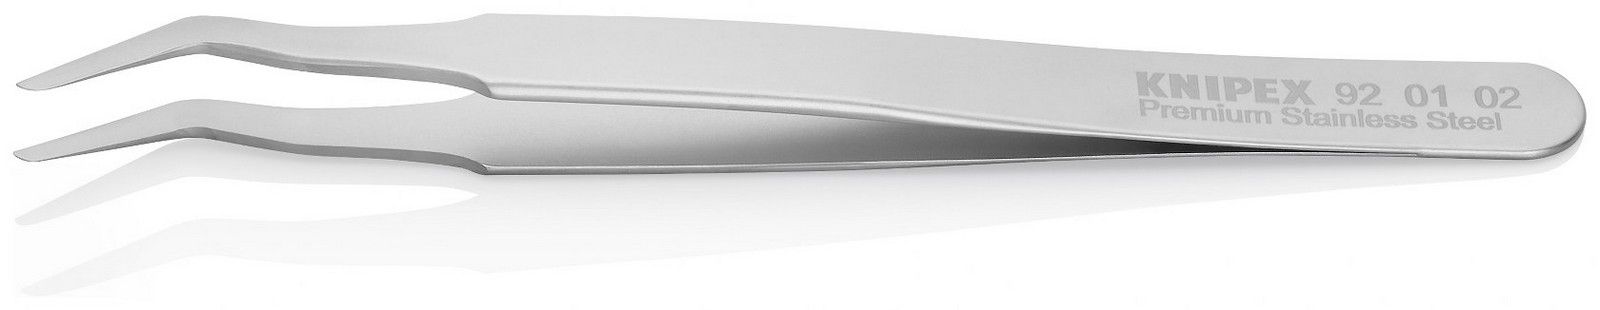 Knipex precizna pinceta SMD 120mm - pod 35° (92 01 02)